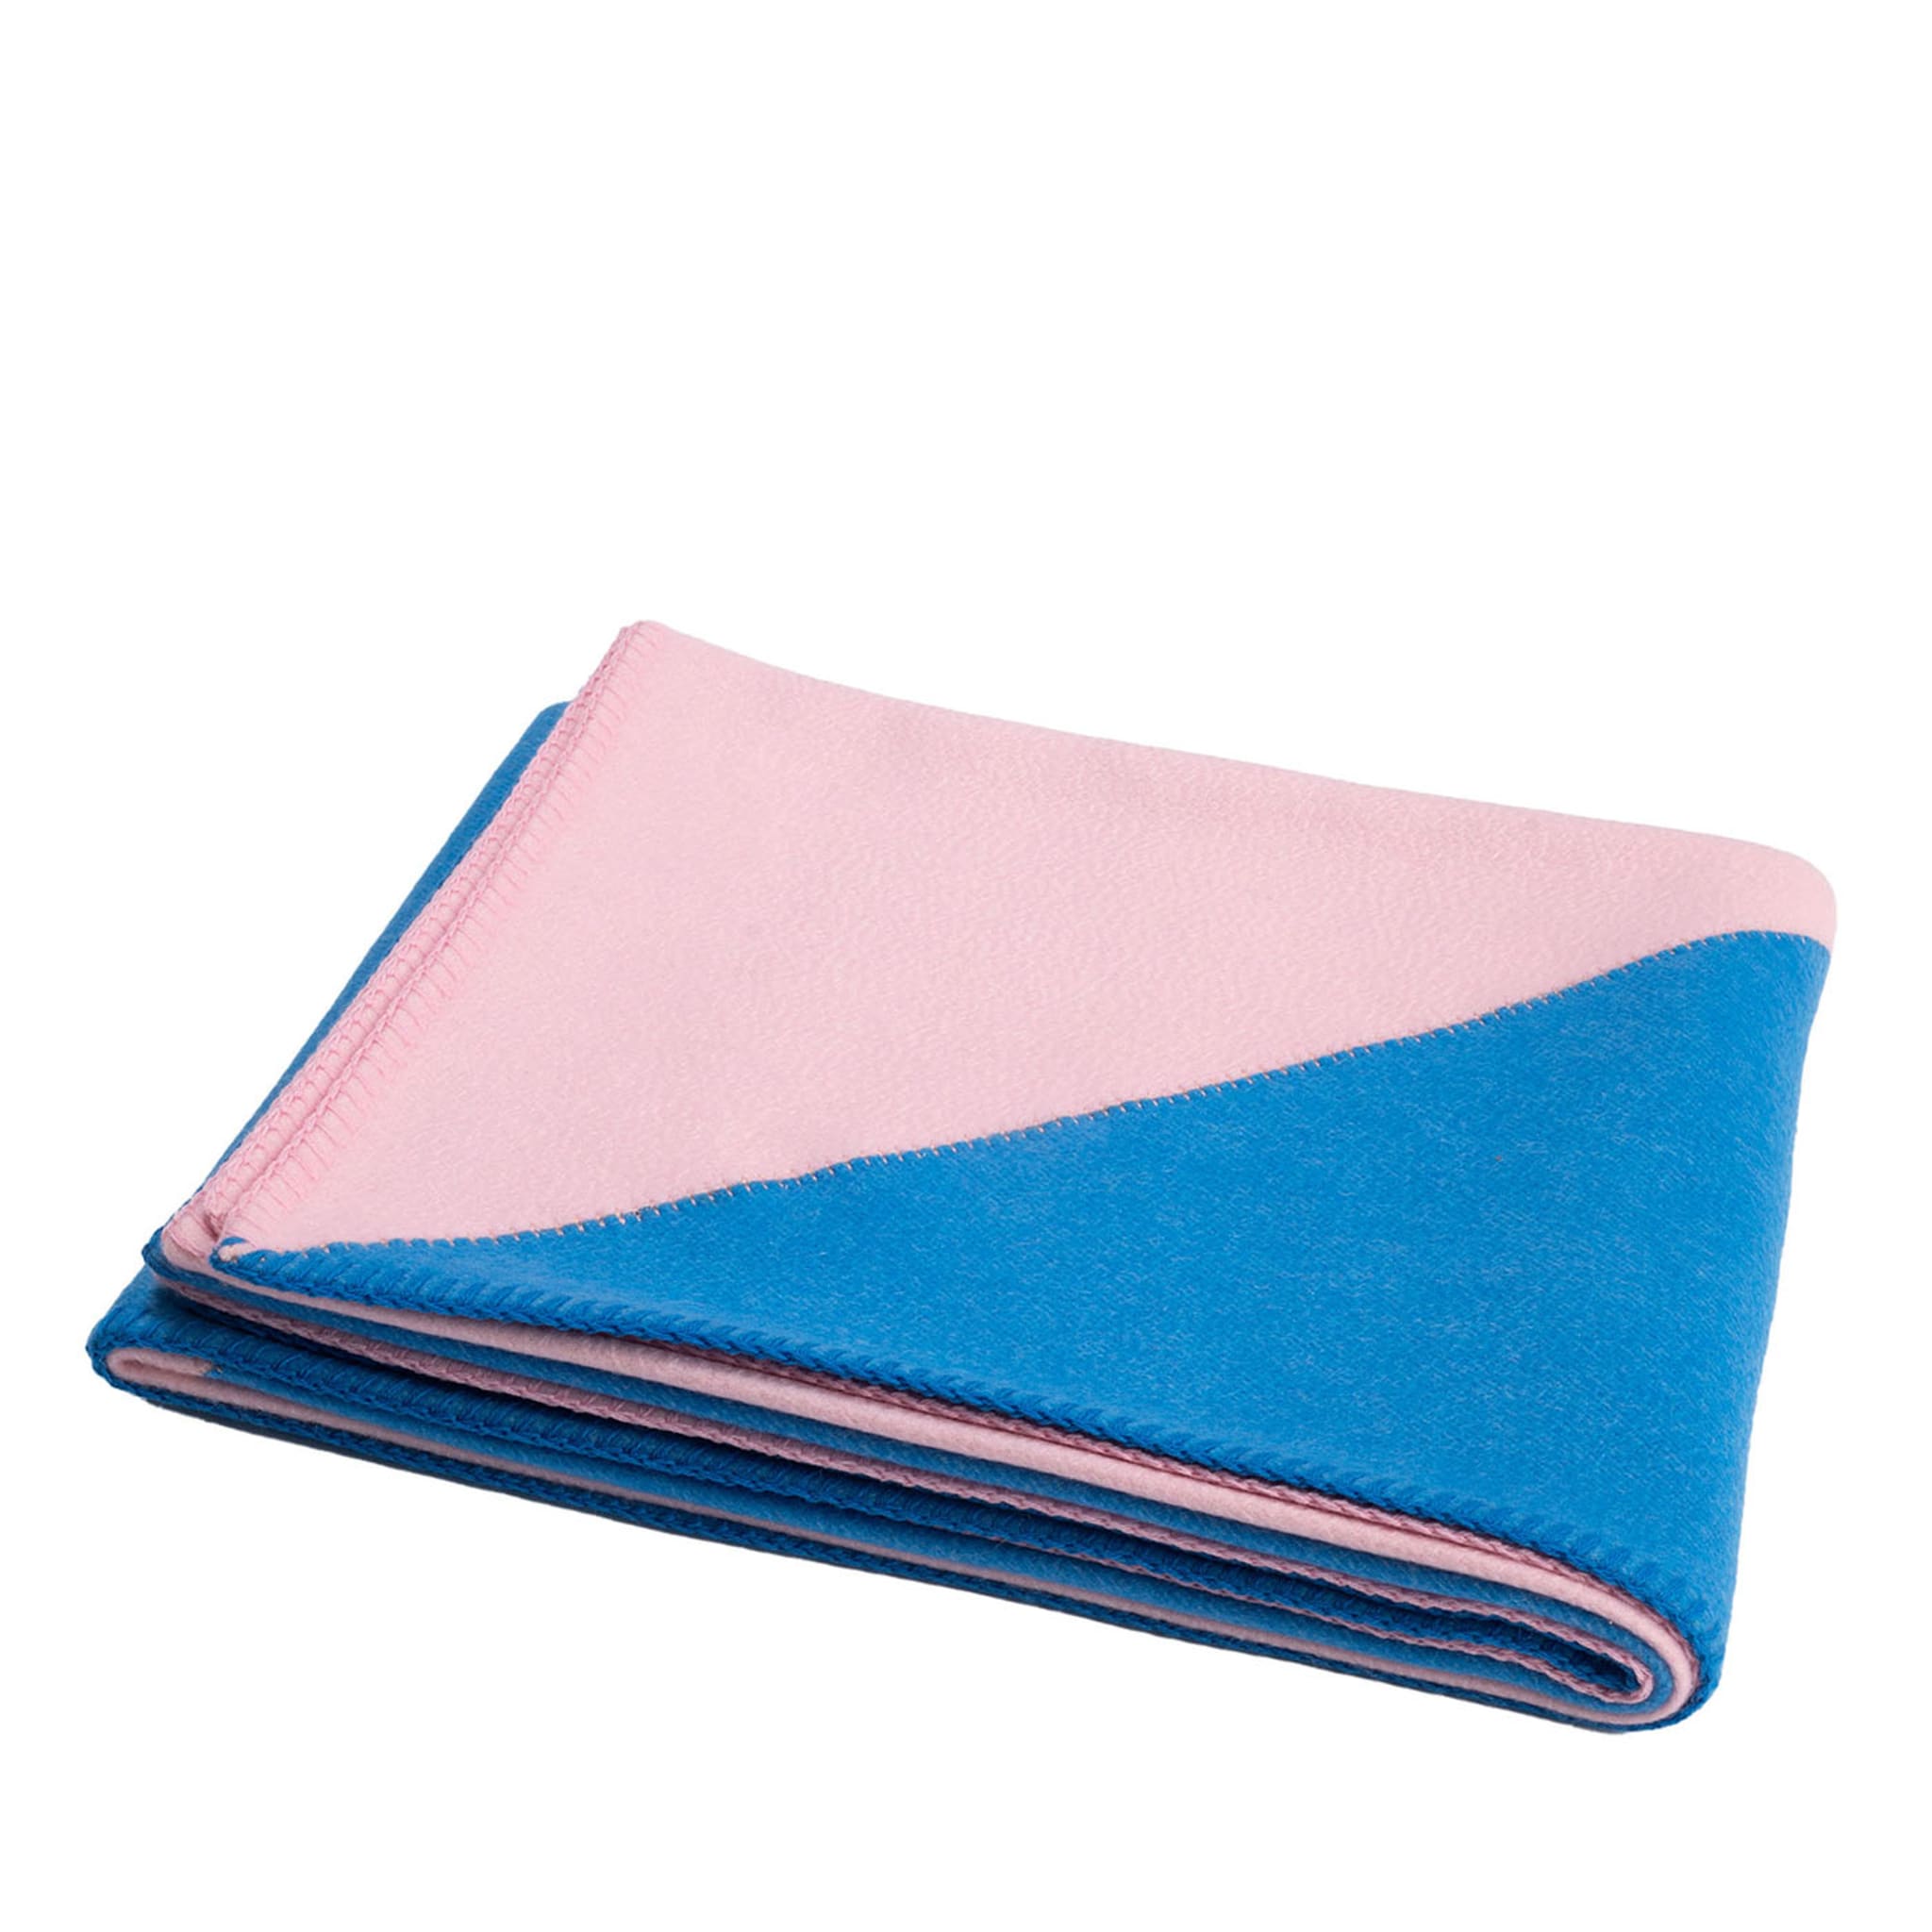 Biella Pink and Blue Blanket - Main view